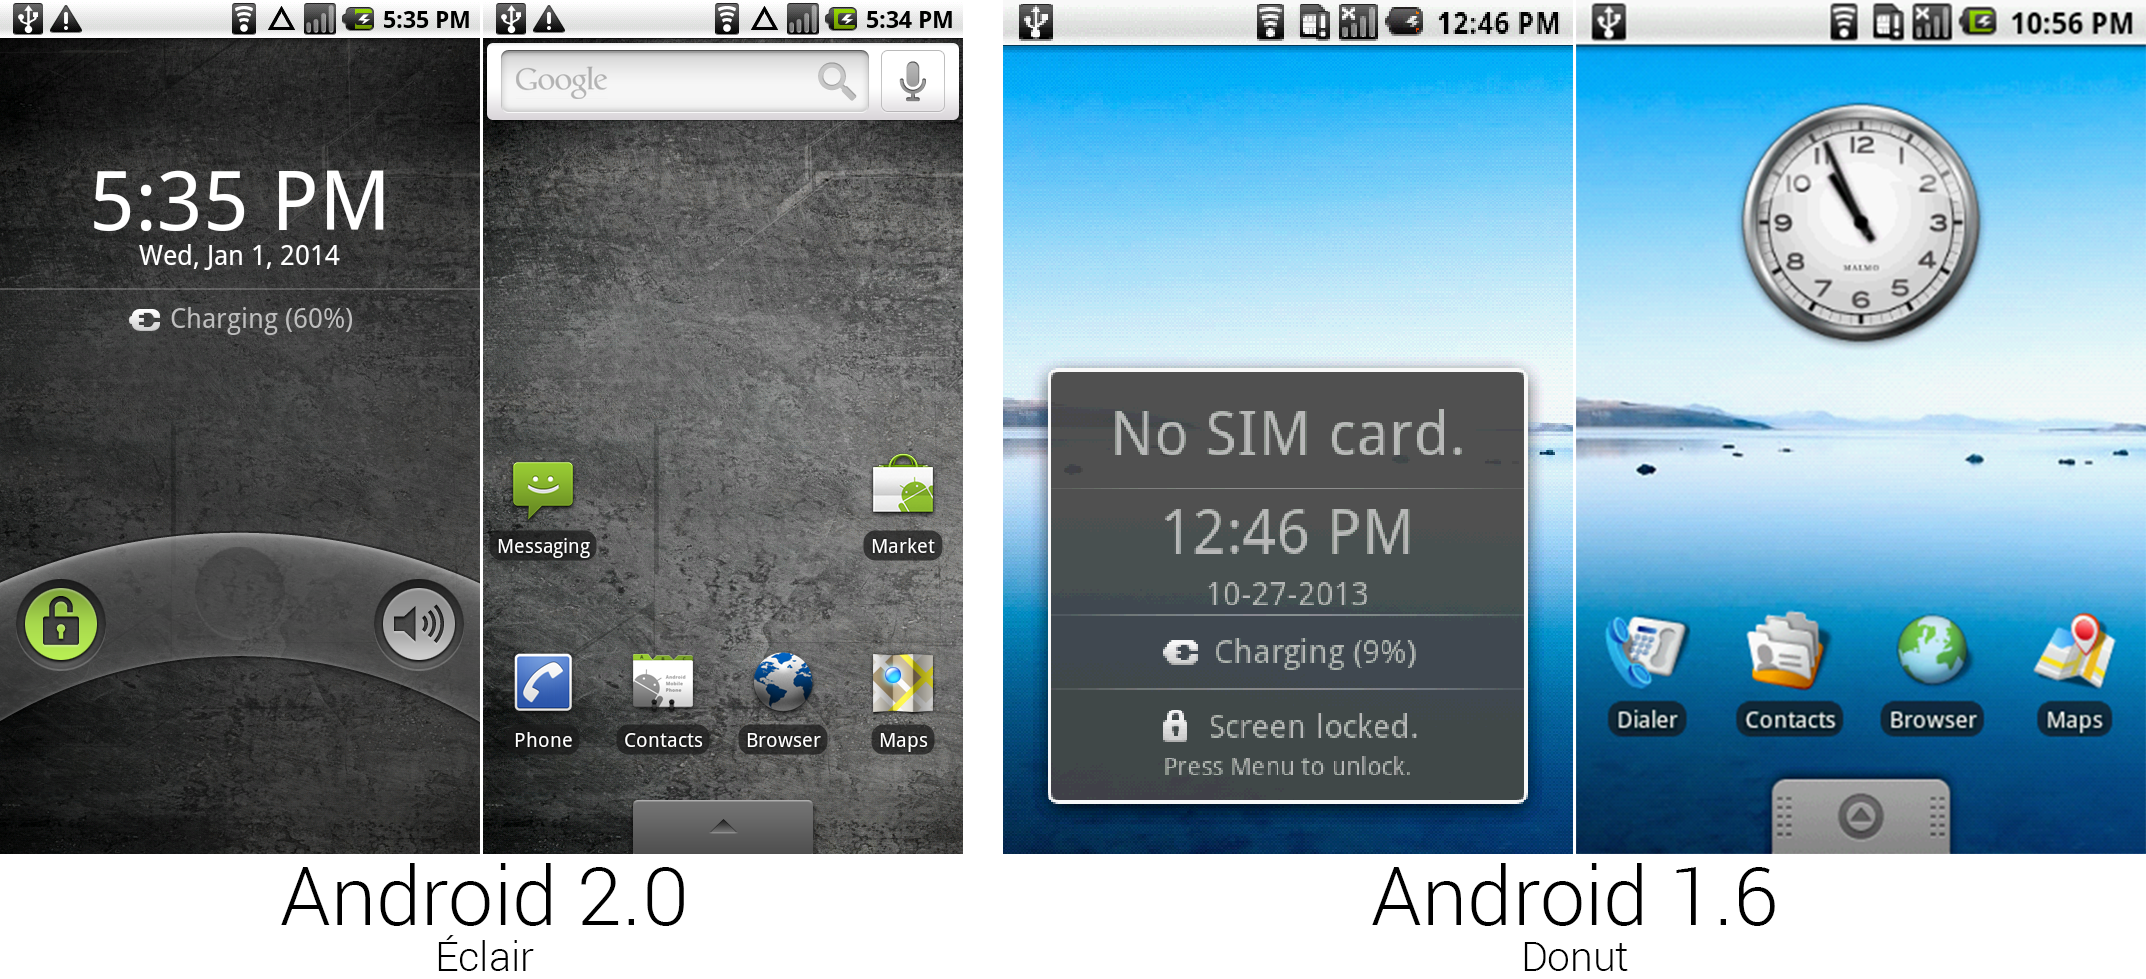 Apk андроид 0. Интерфейс андроид 2. Android 2.0. Интерфейс андроид 1. Андроид 1.0 Интерфейс.